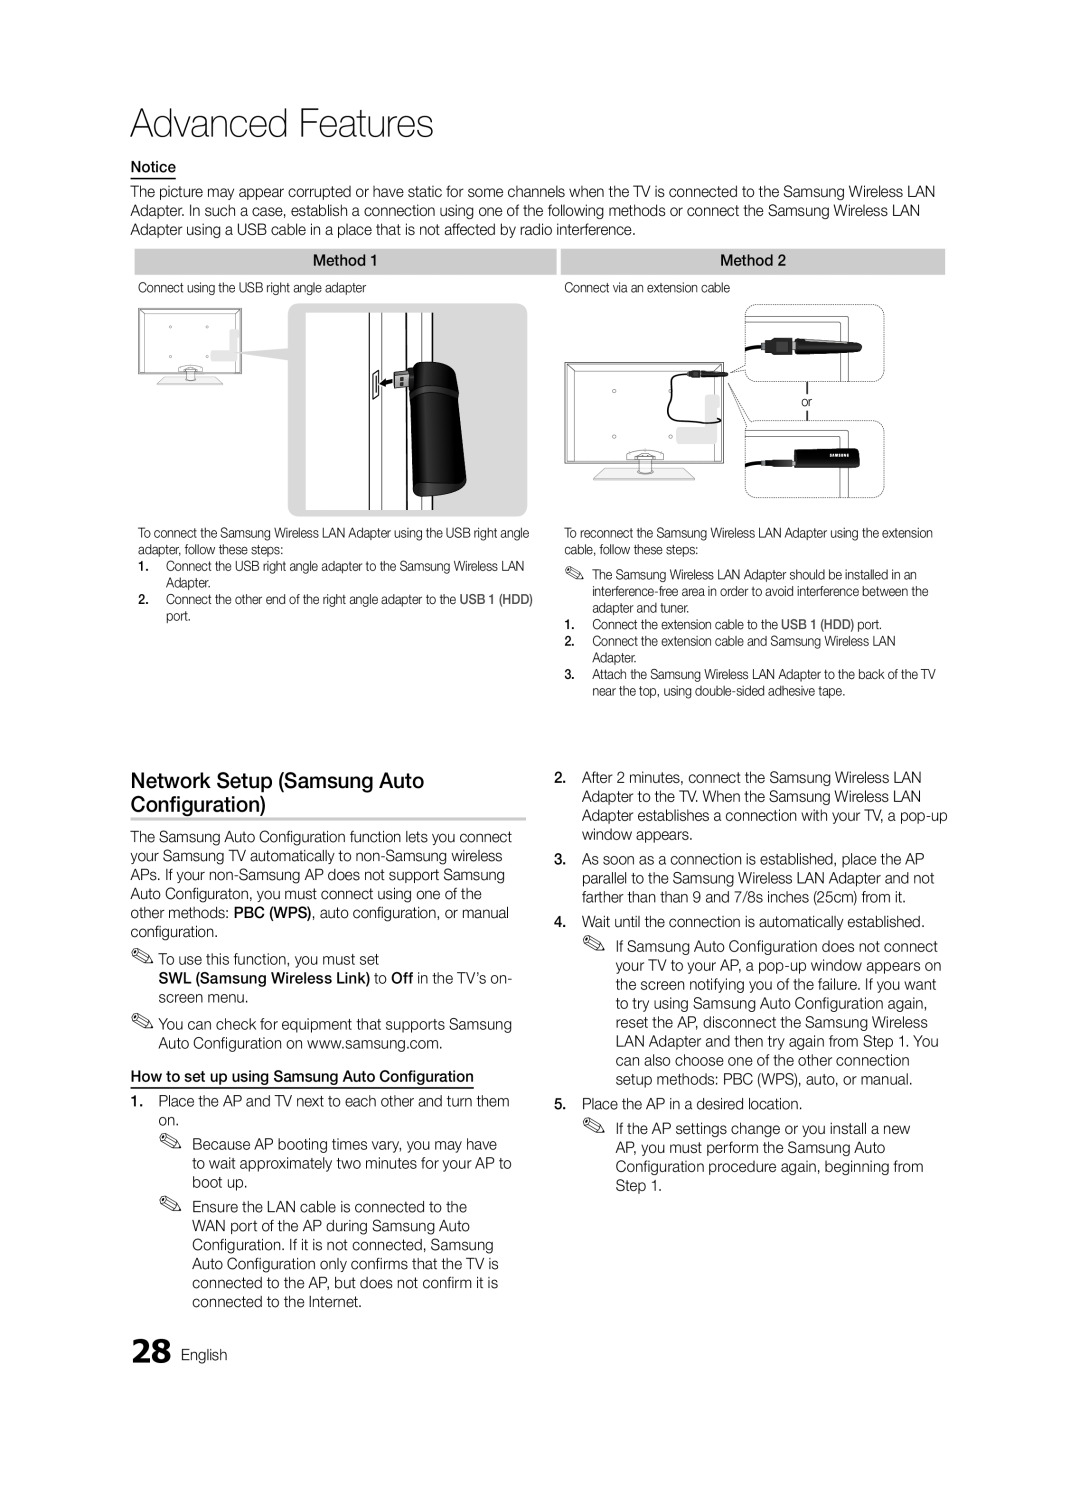 Samsung BN68-03004B-02, UC5000-ZC user manual Network Setup Samsung Auto Configuration, Advanced Features 